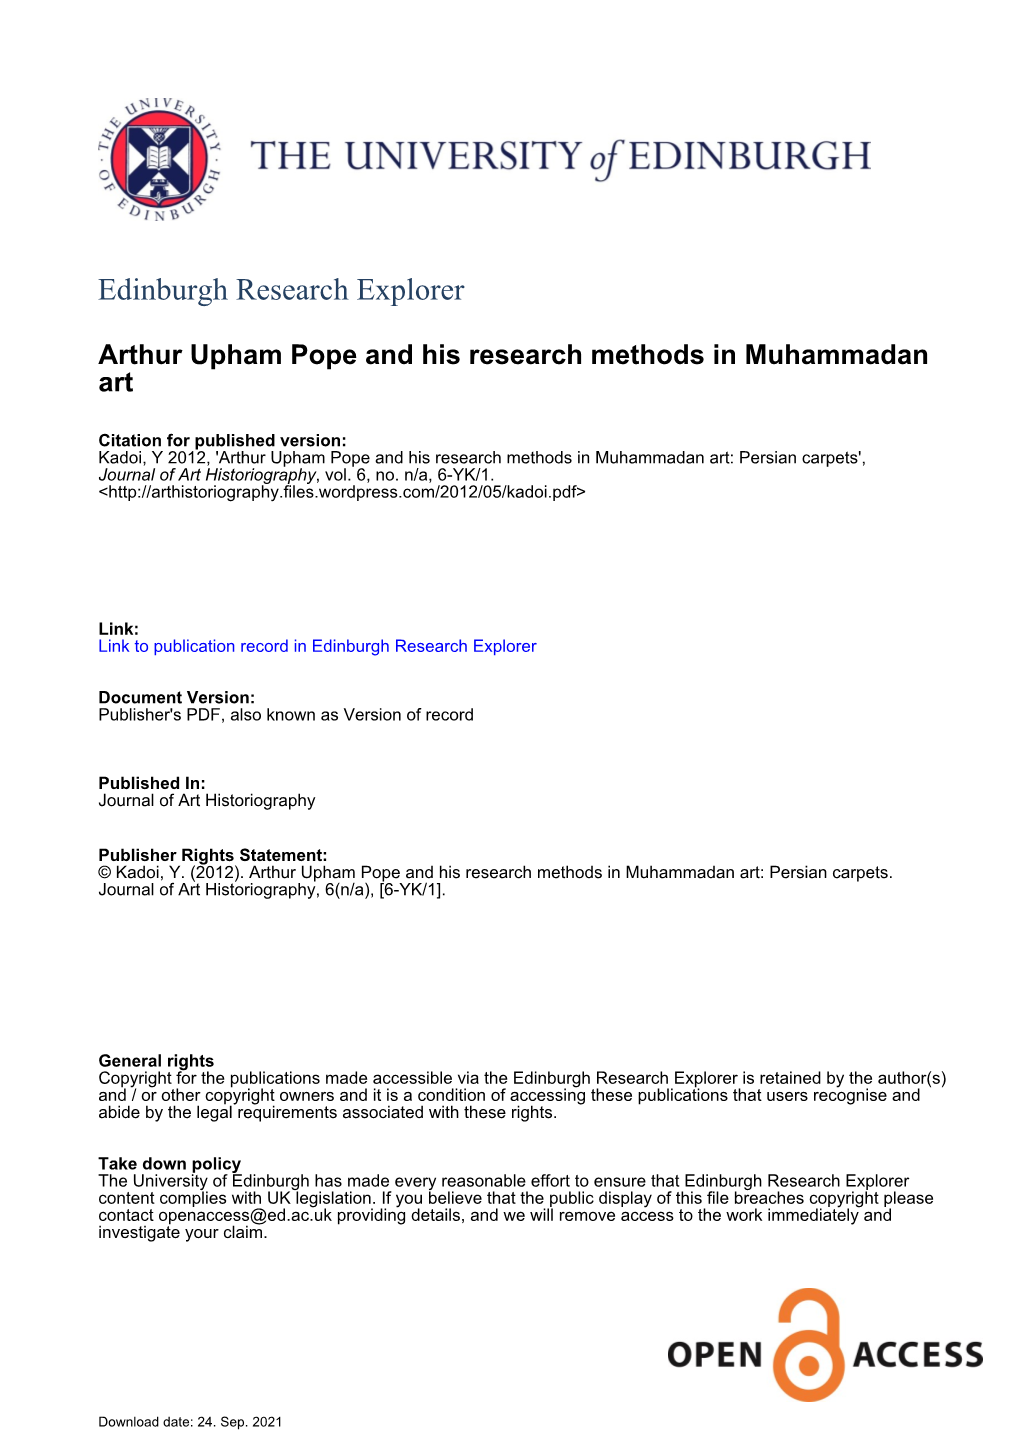 Arthur Upham Pope and His 'Research Methods in Muhammadan Art'